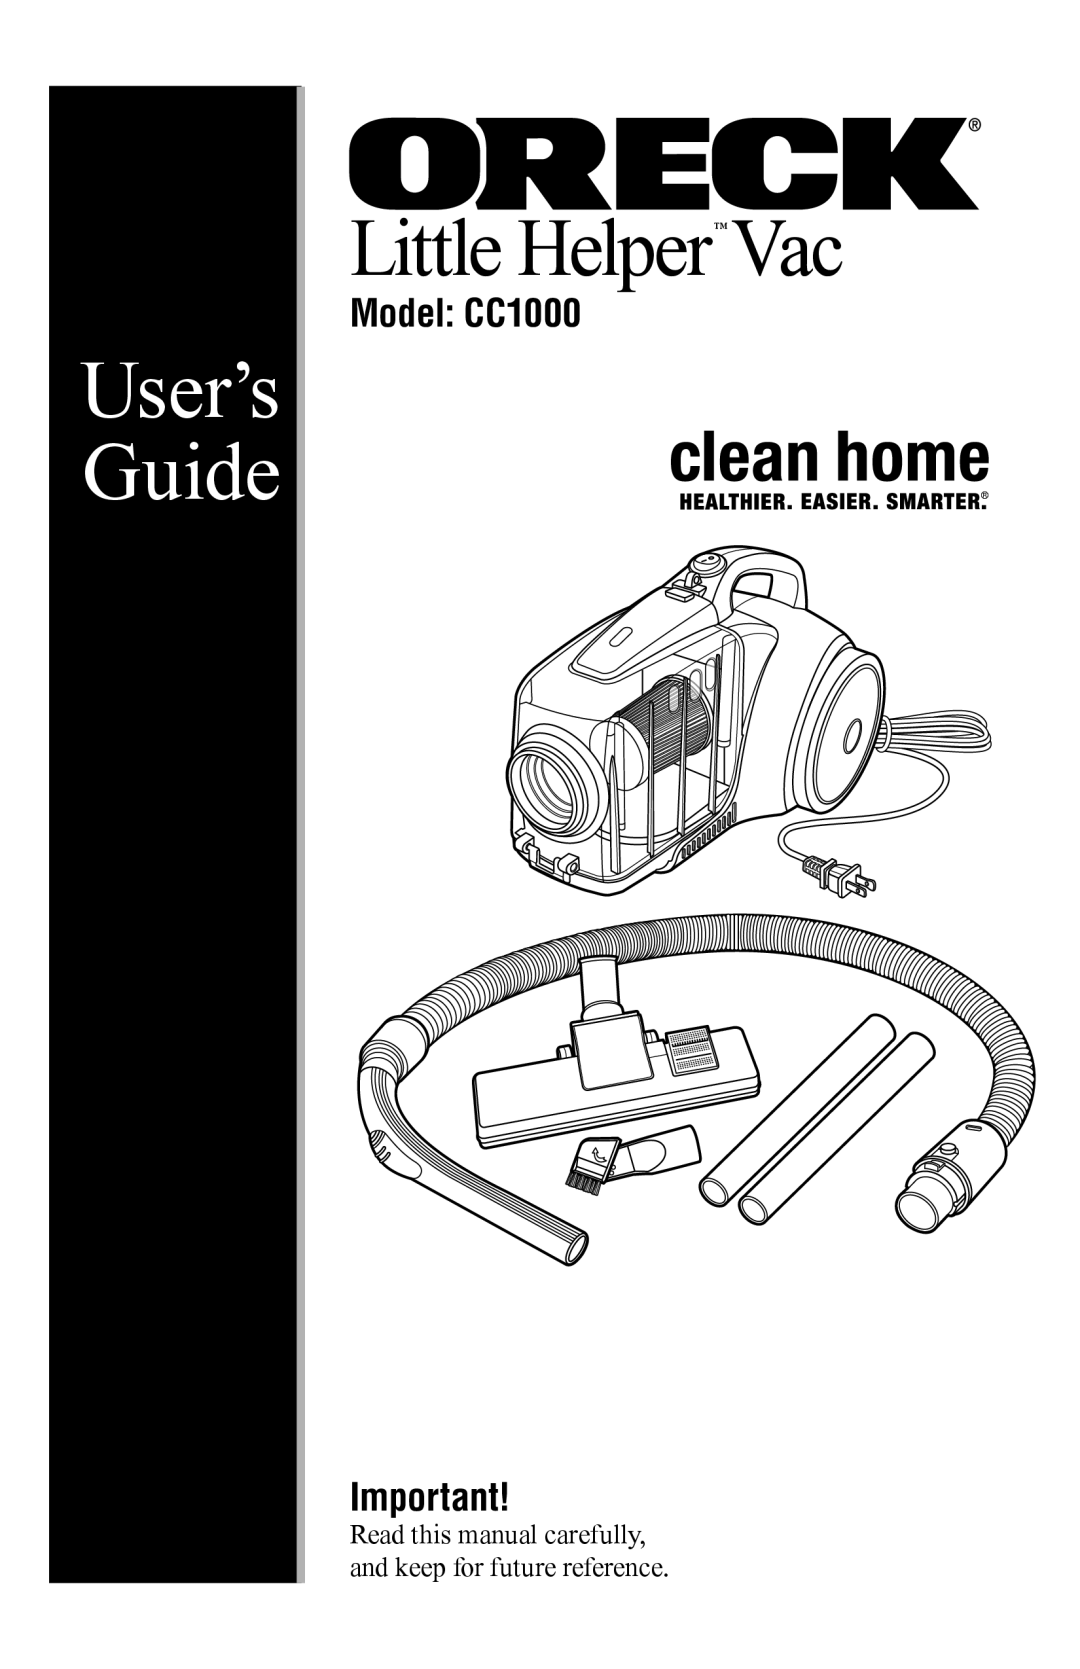 Oreck manual Little Helper Vac, User’s Guide, Model CC1000 